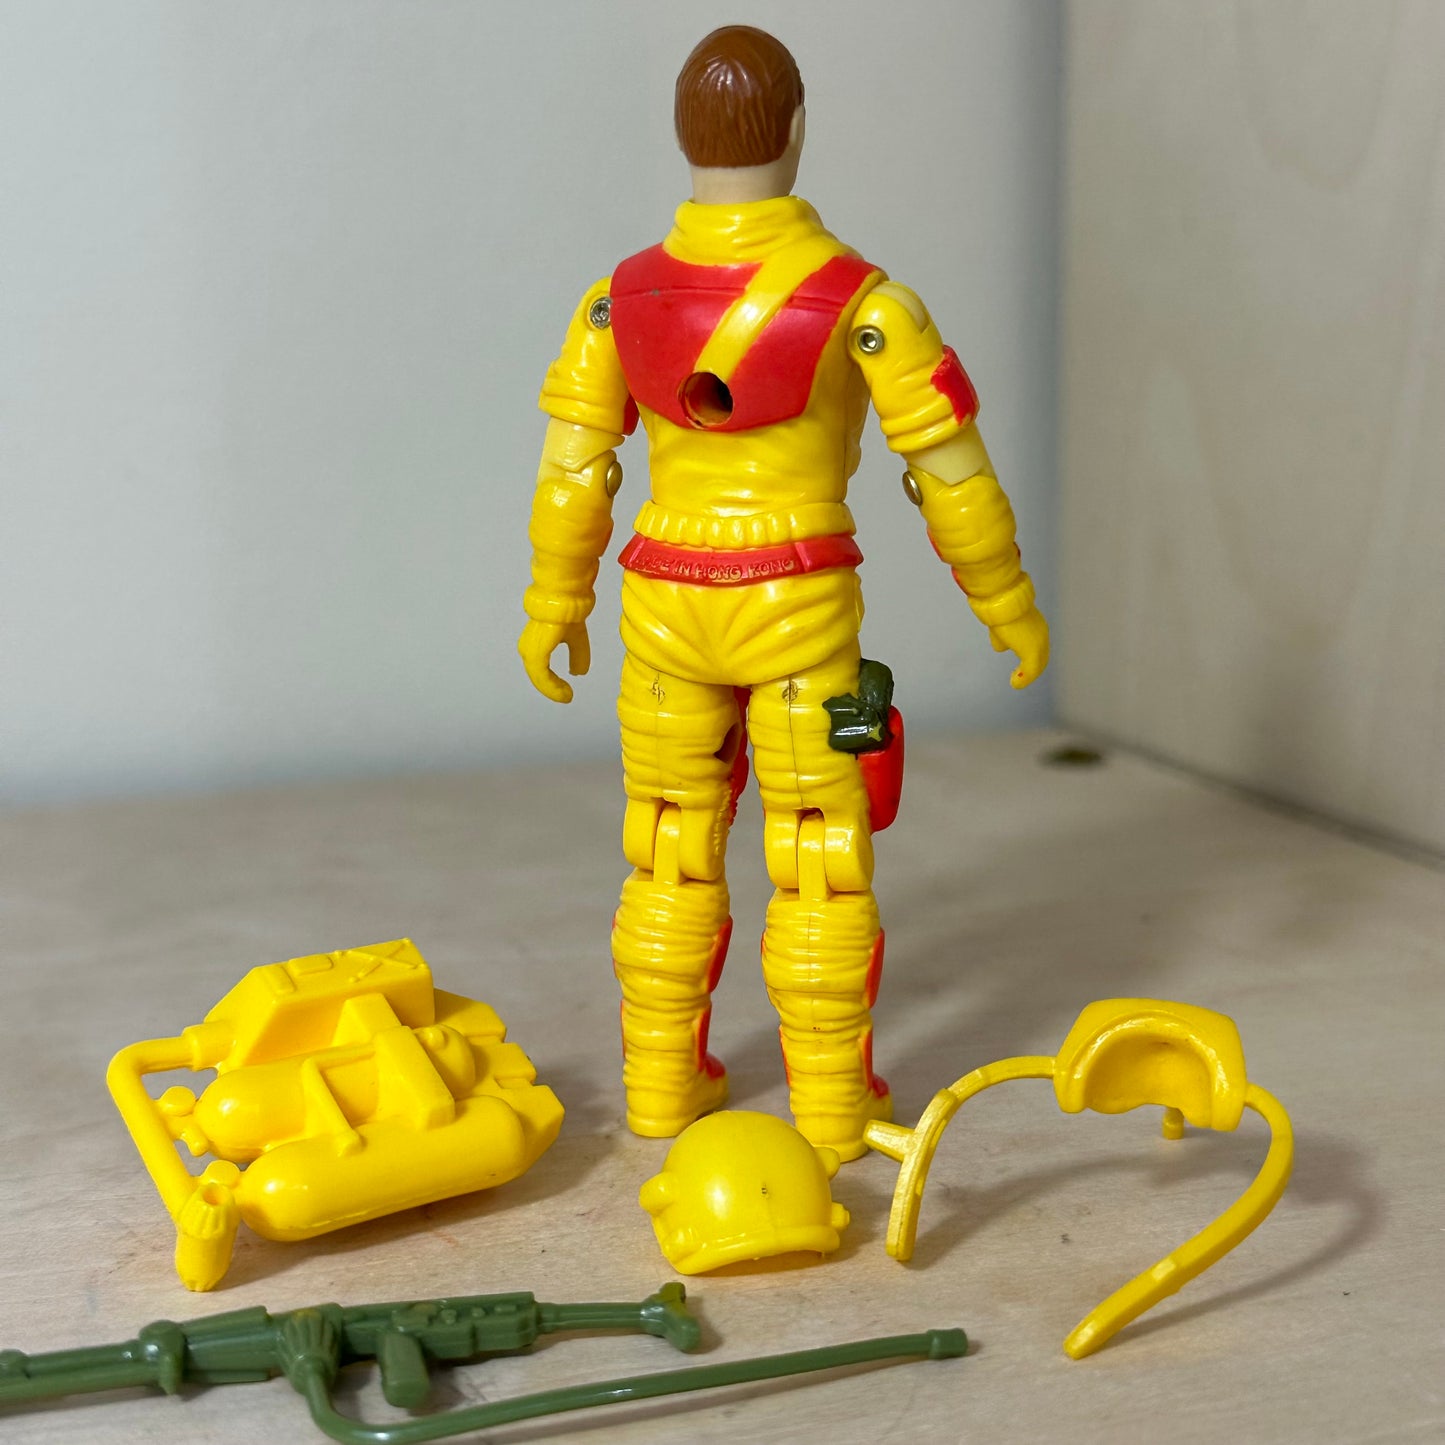 1984 GI Joe Blowtorch Complete Vintage Action Figure Fireman Toy